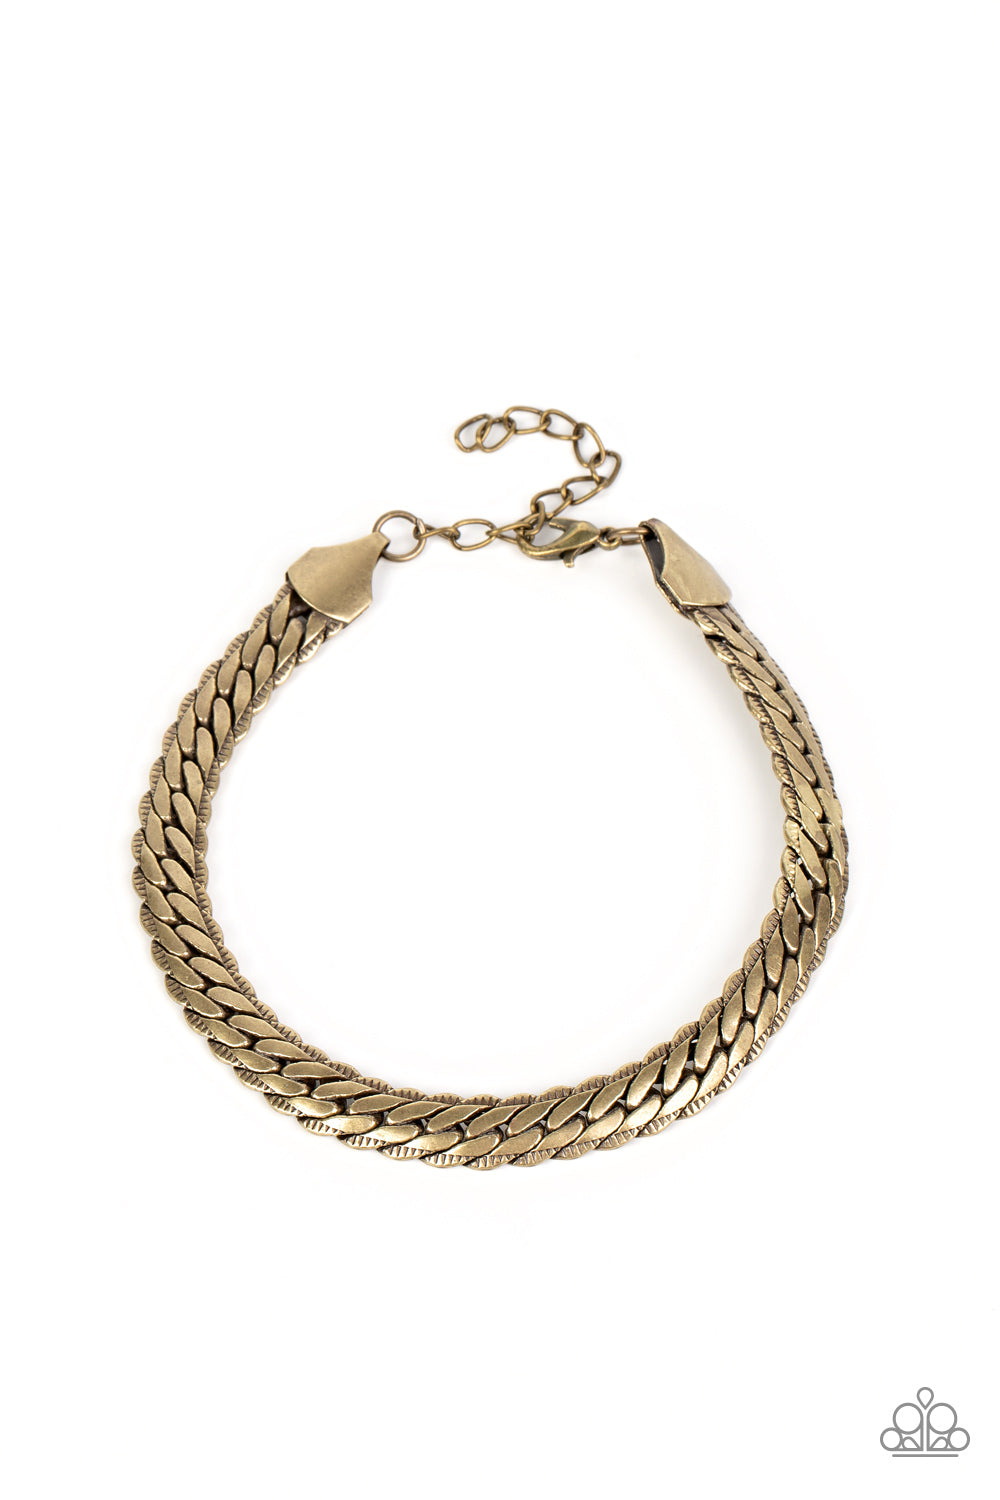 Cargo Couture - Men’s Collection Brass Bracelet